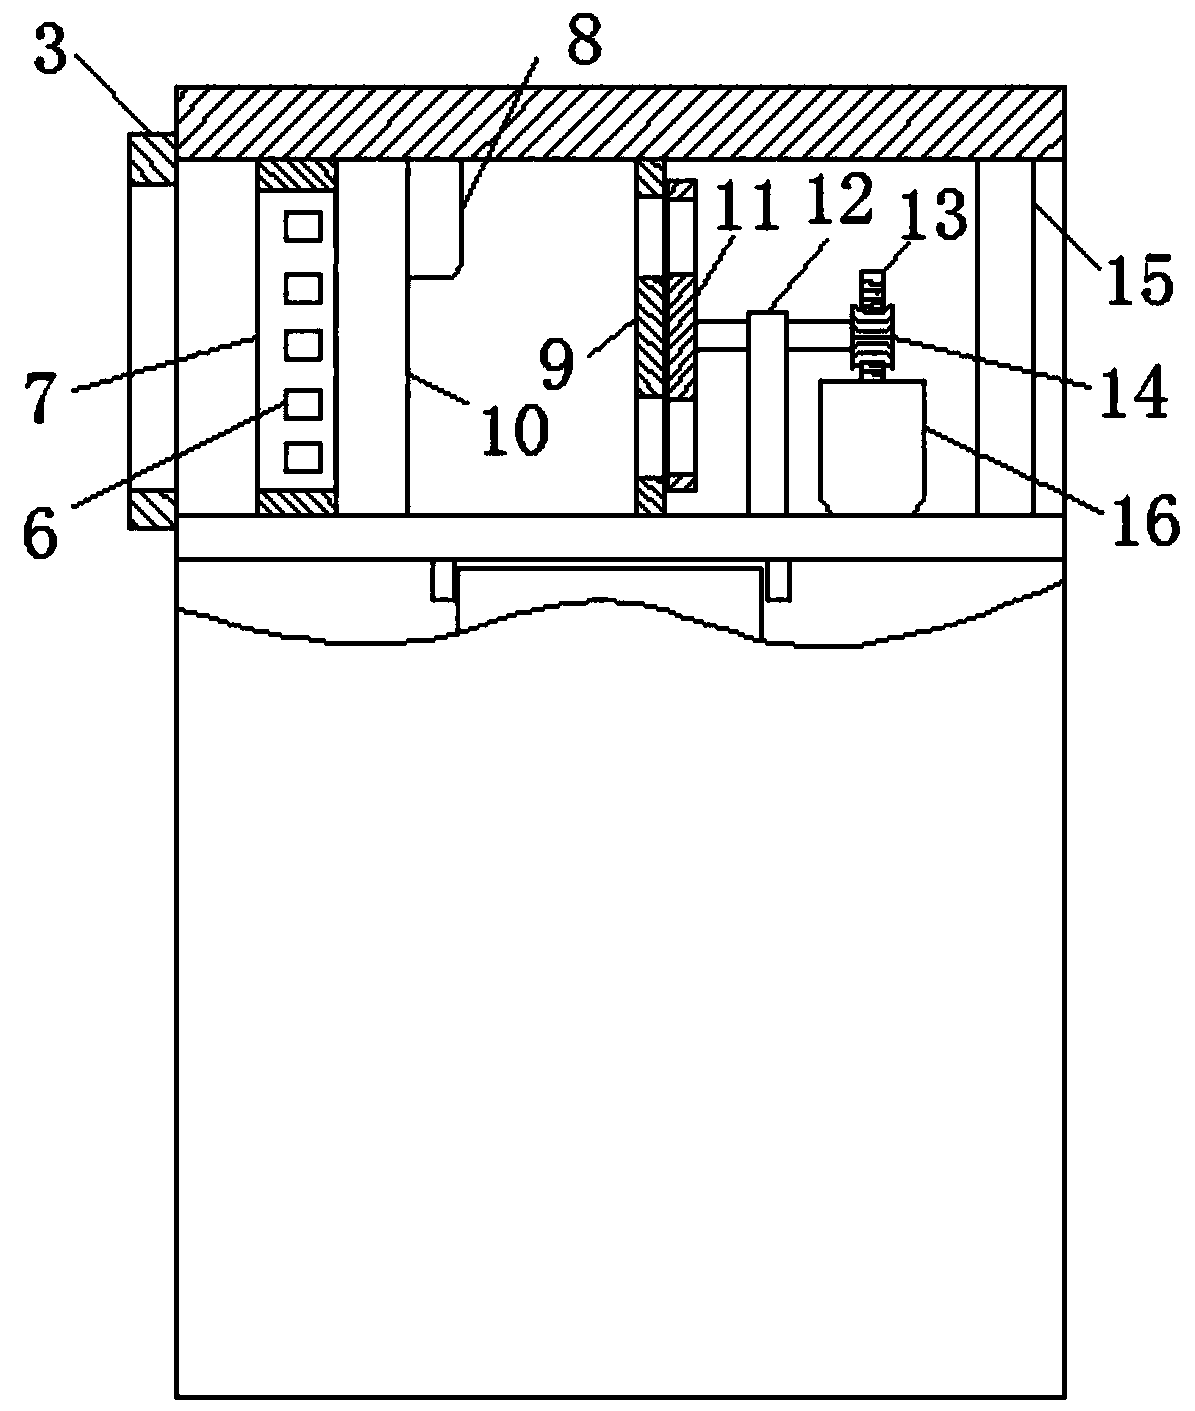 Rail traffic roller-shutter-type adjustable ventilating platform door